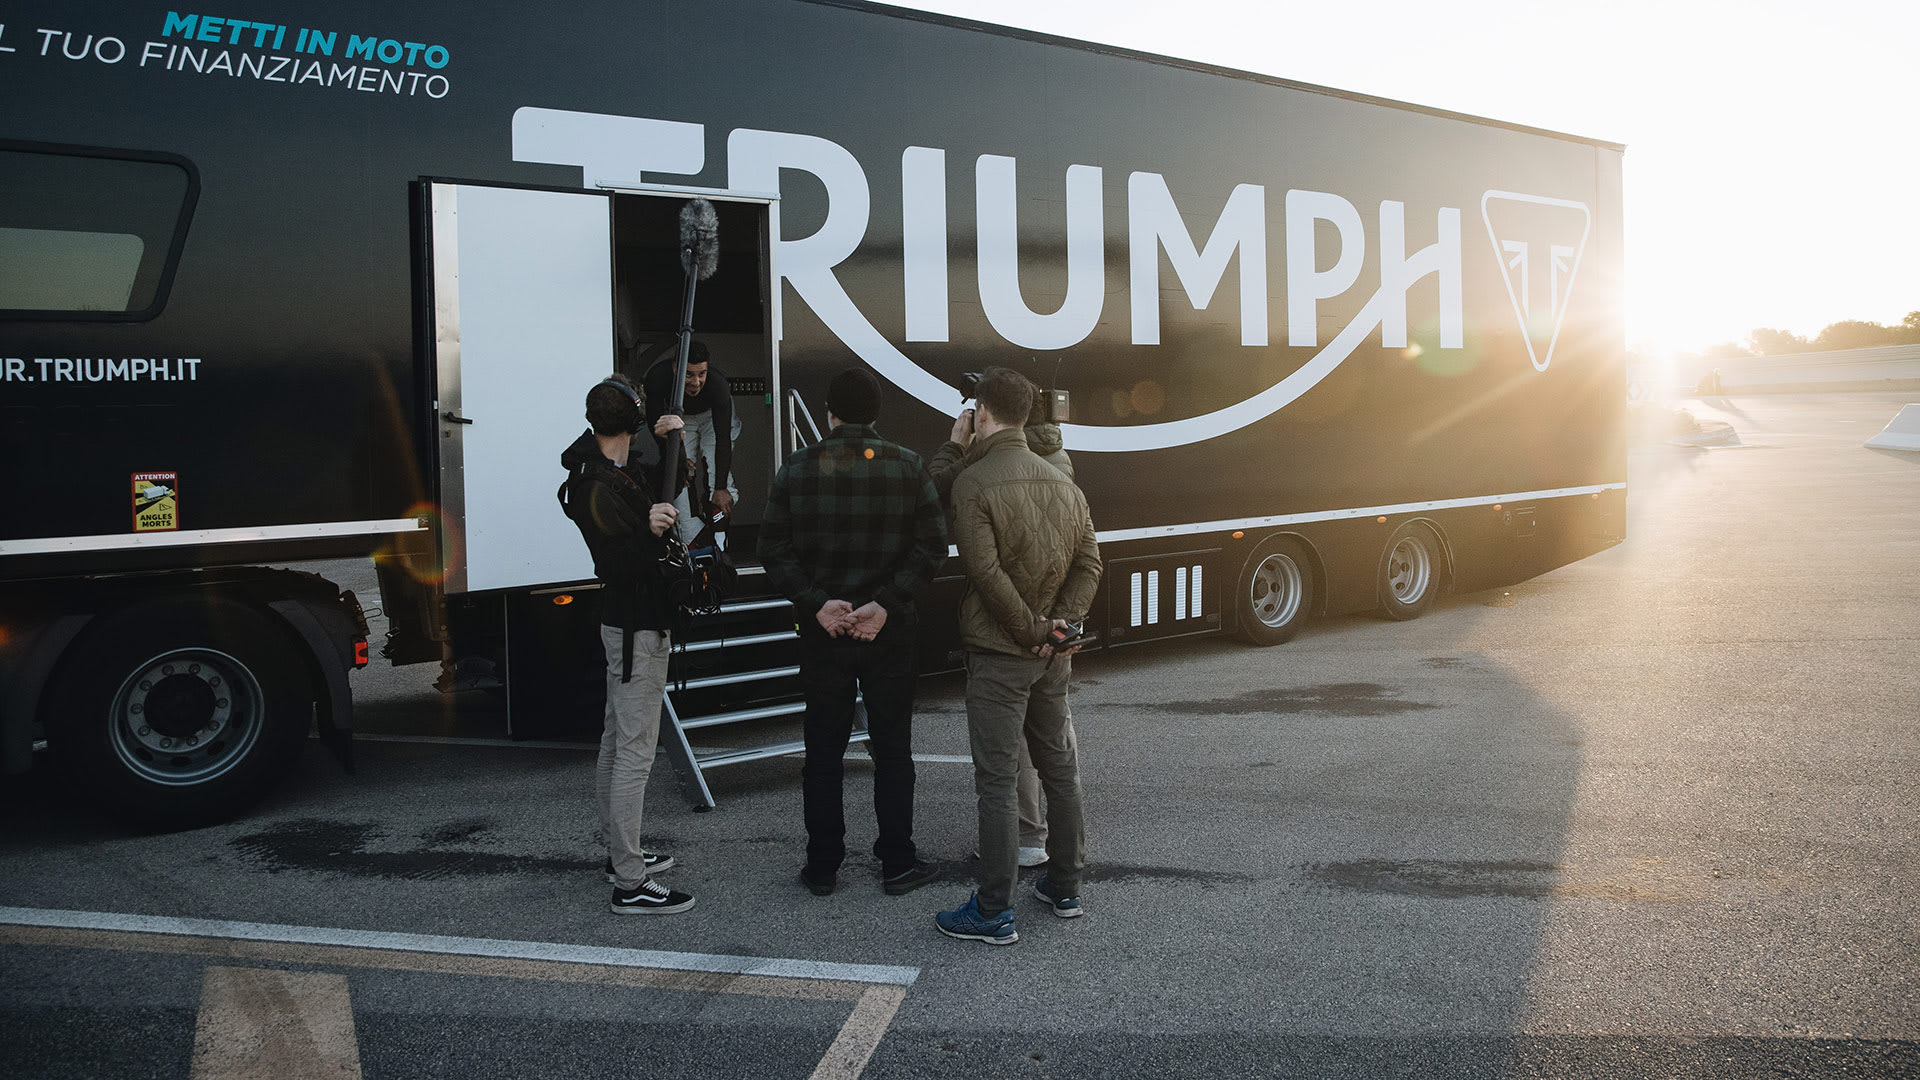 Triumph support truck being filmed